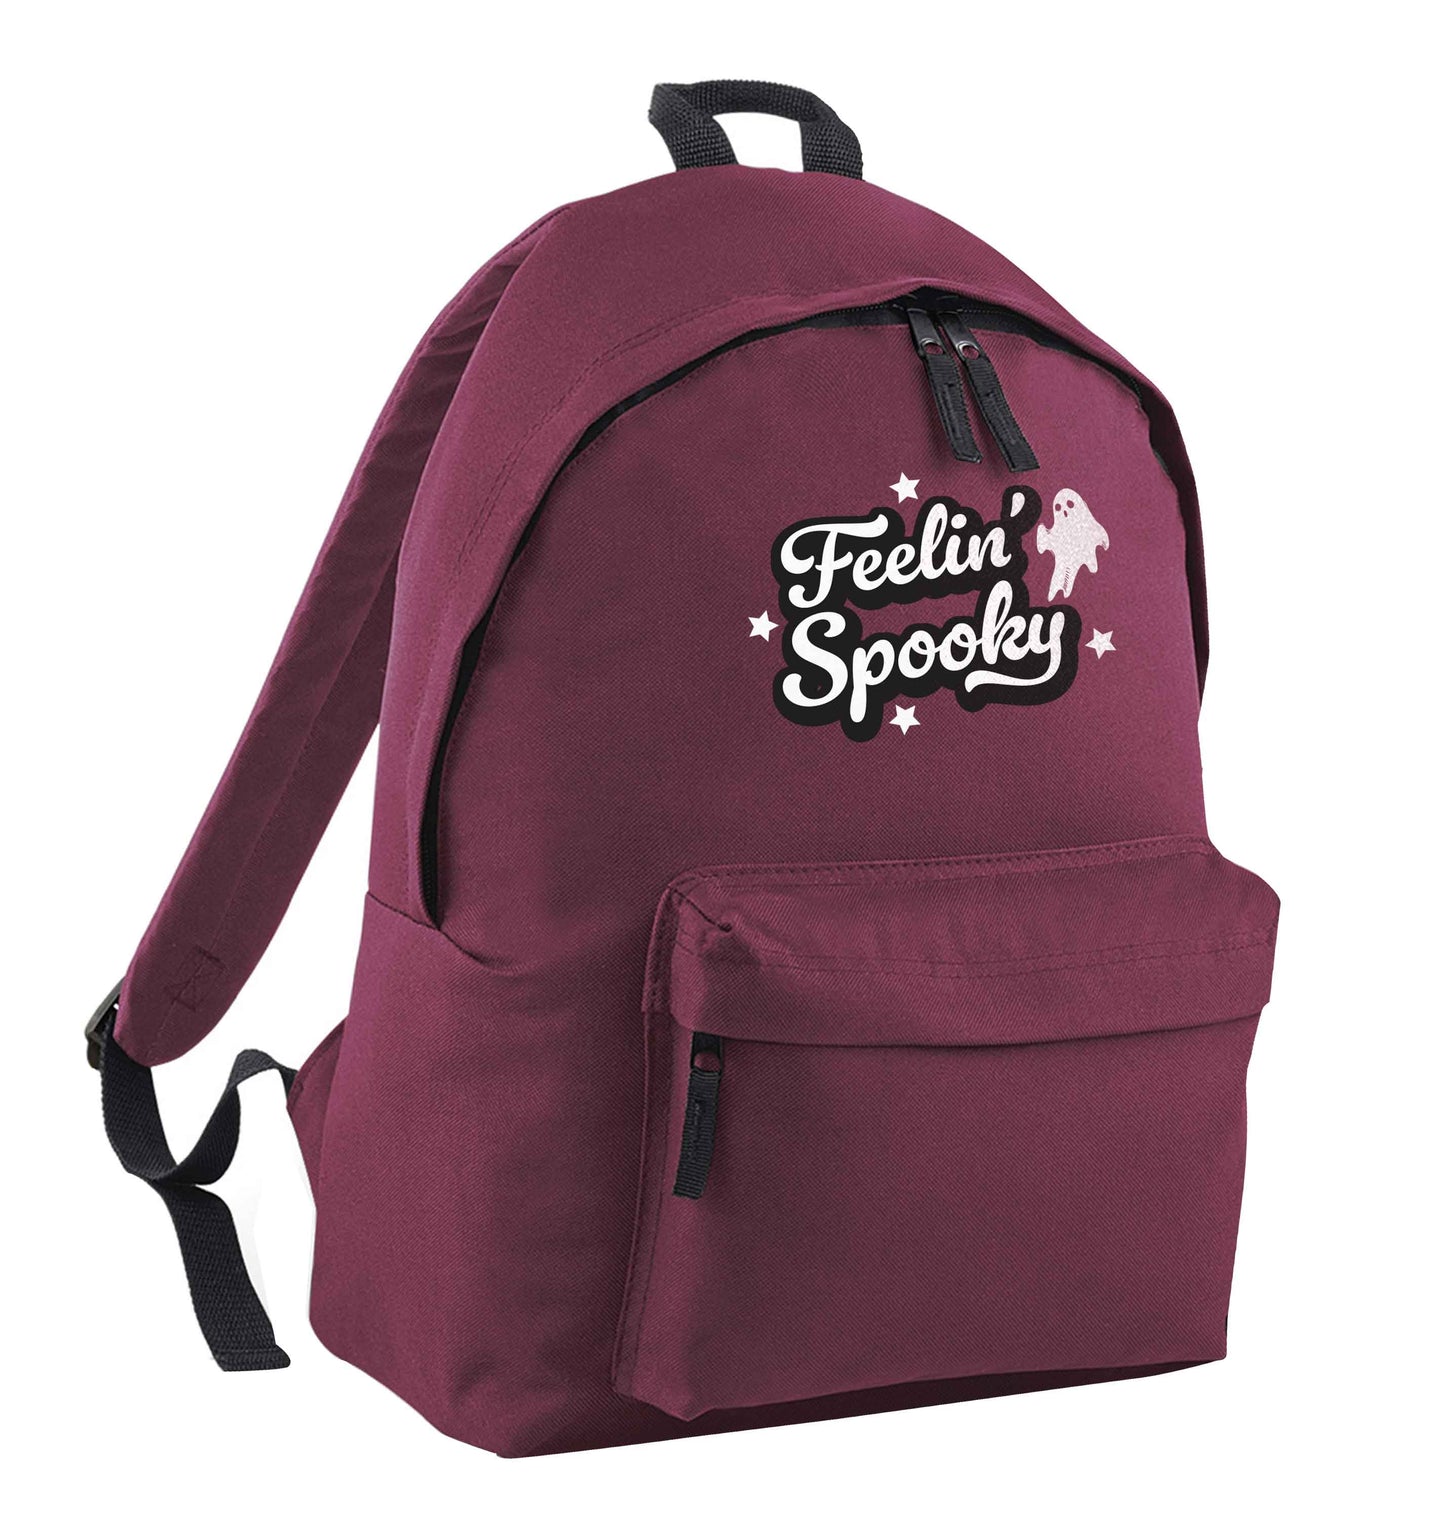 Feelin' Spooky Kit maroon adults backpack